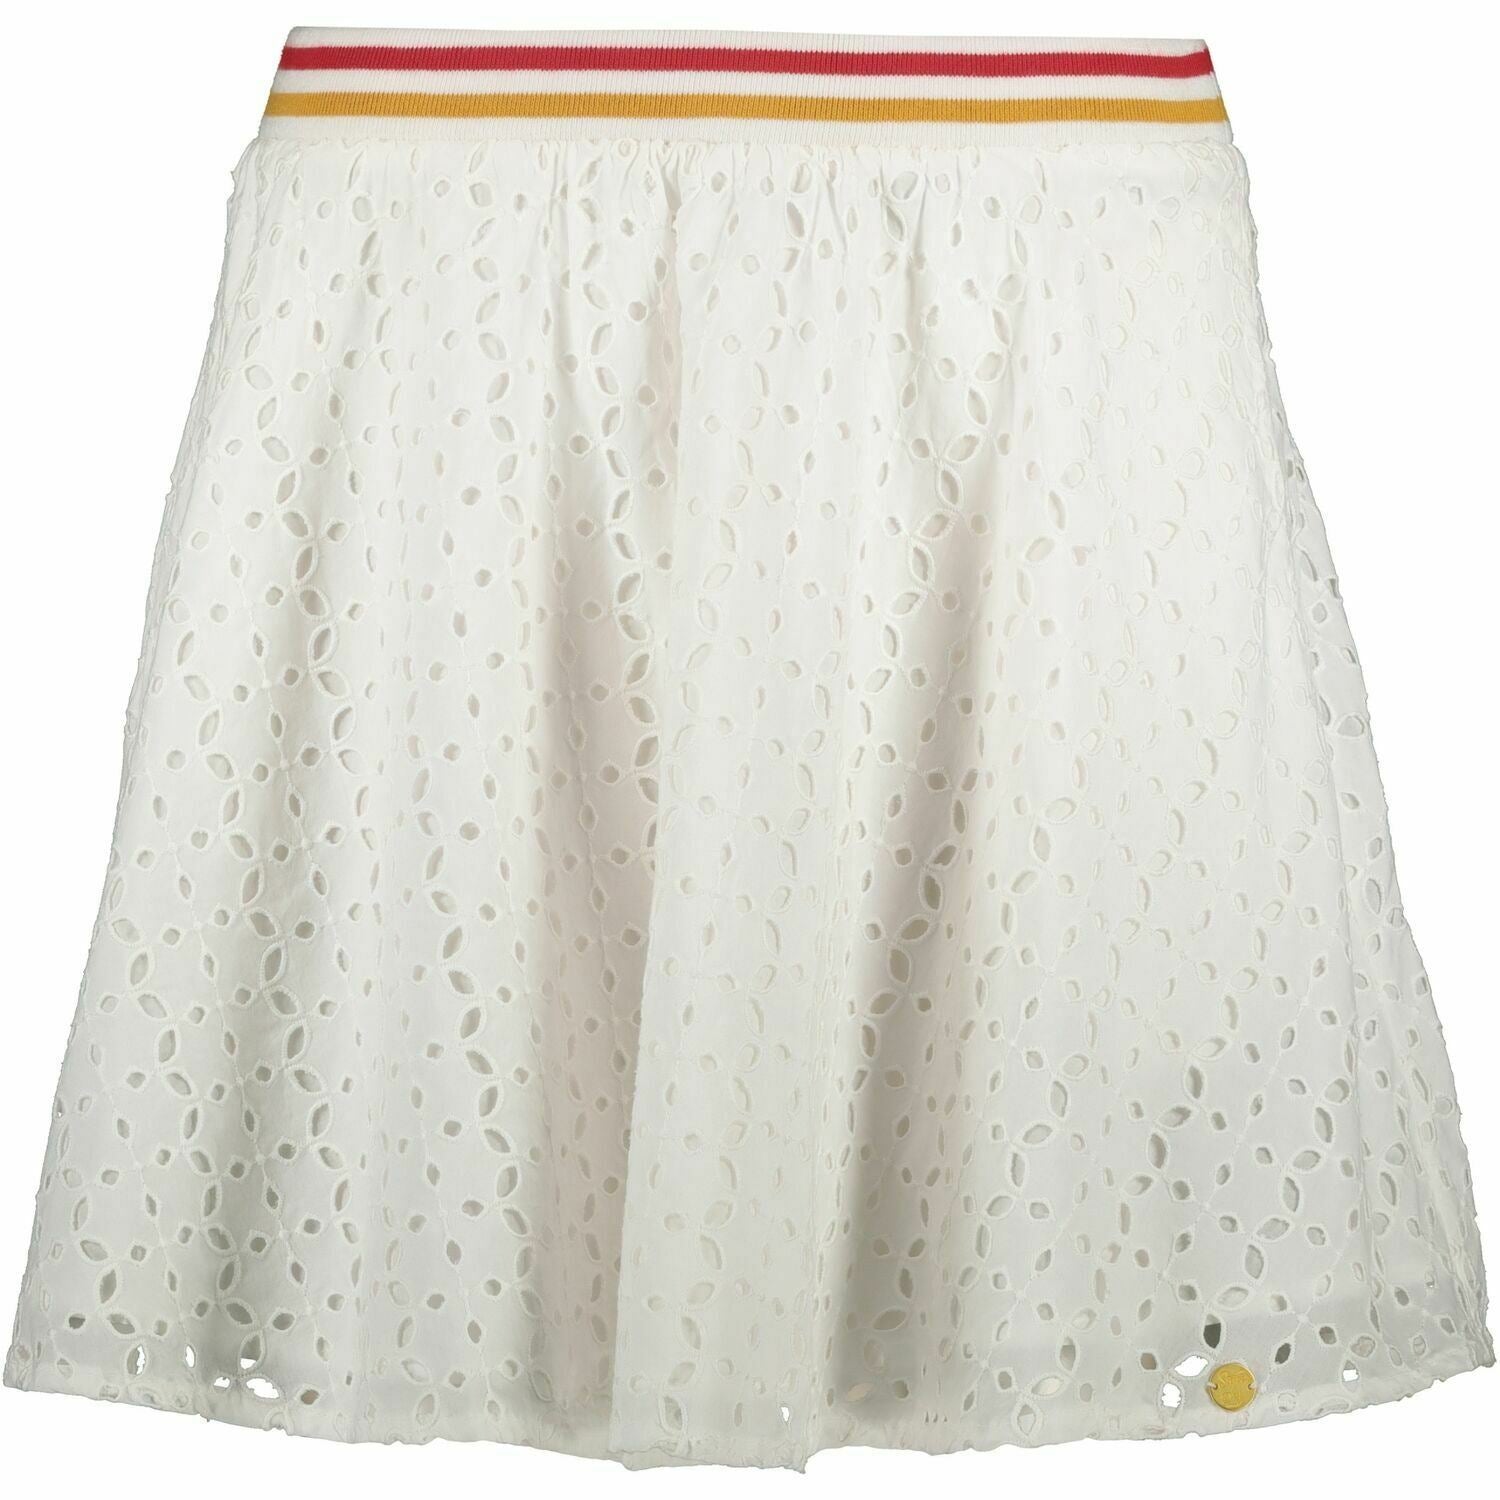 SUPERDRY Women's TEAGAN SCHIFFLI Skirt, White, size XS / UK 8